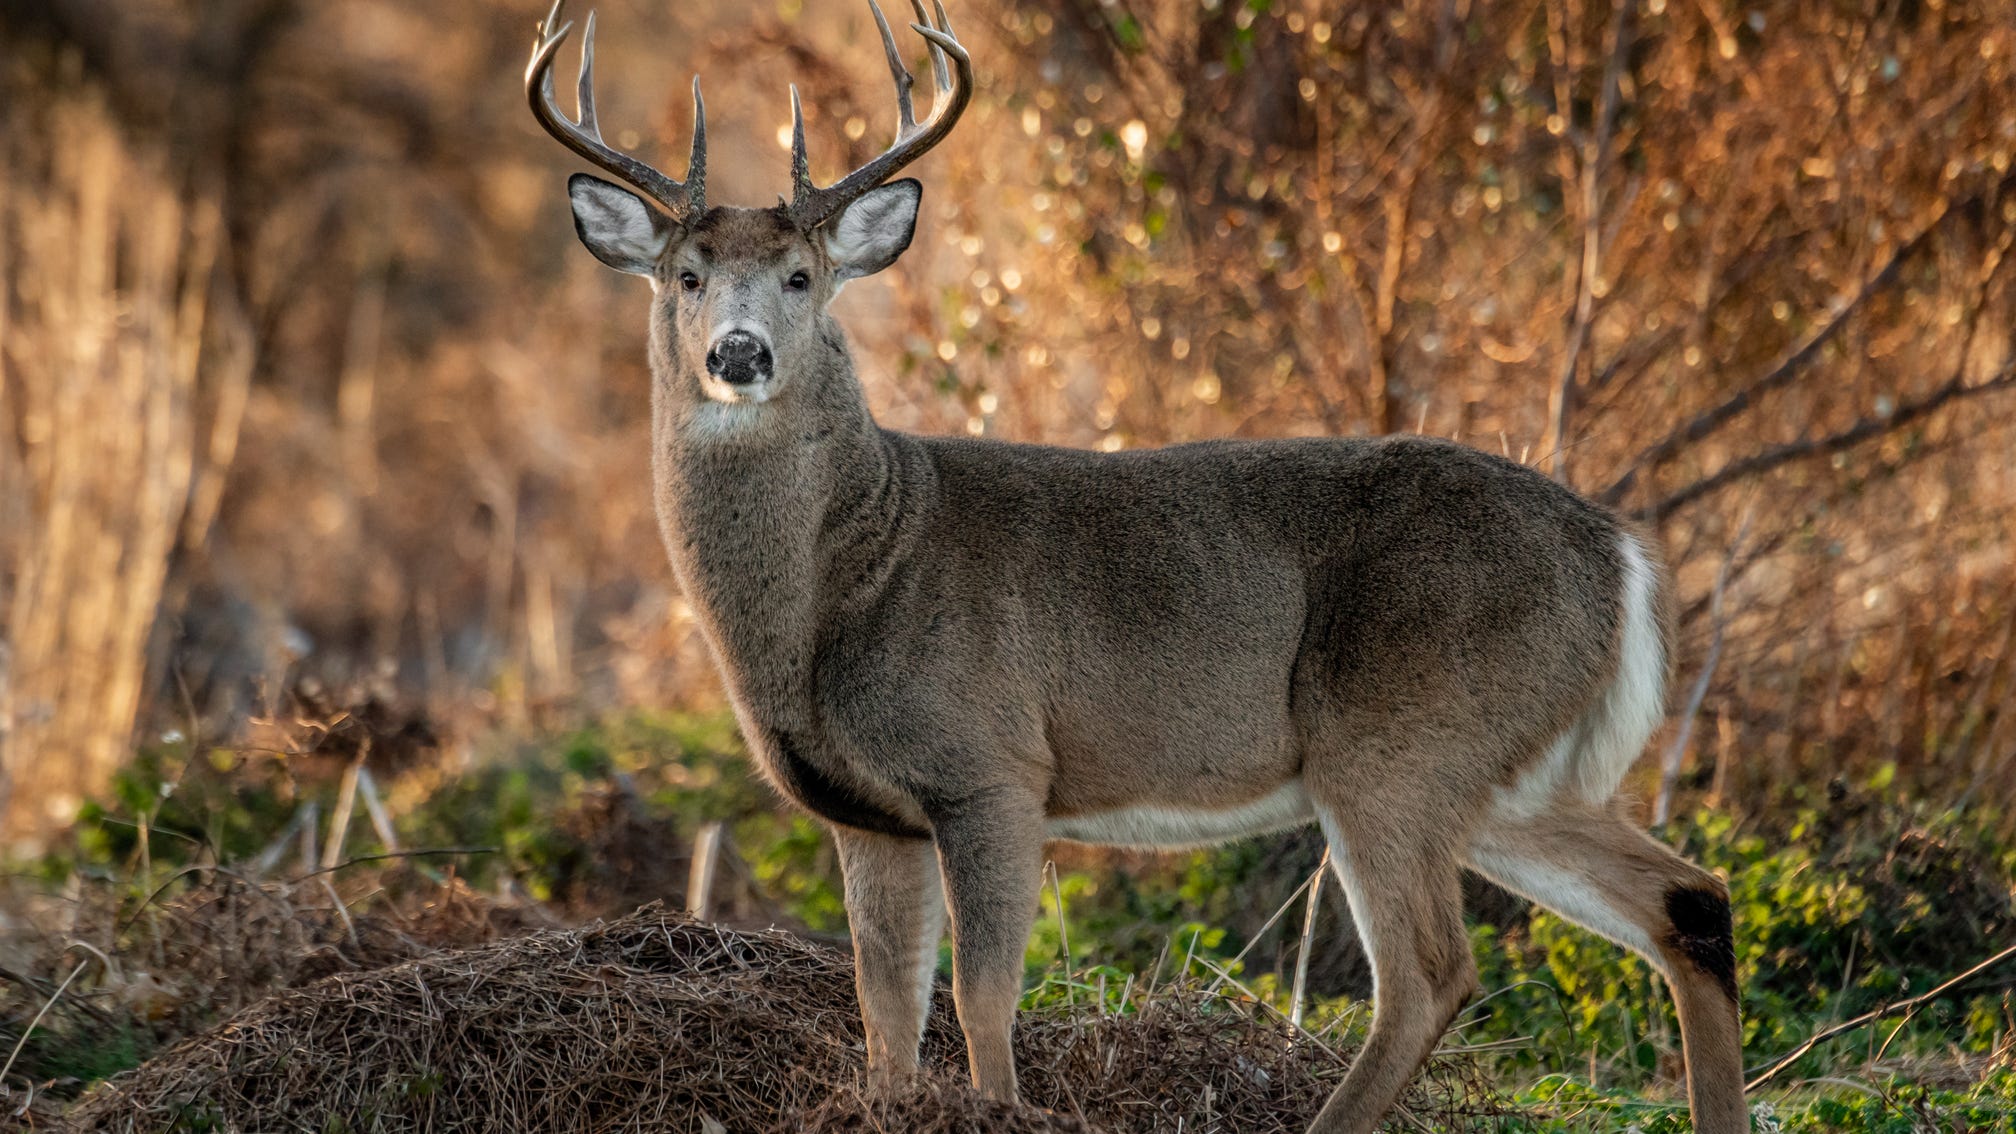 Coronavirus is spreading in deer. Will it slow human immunity?